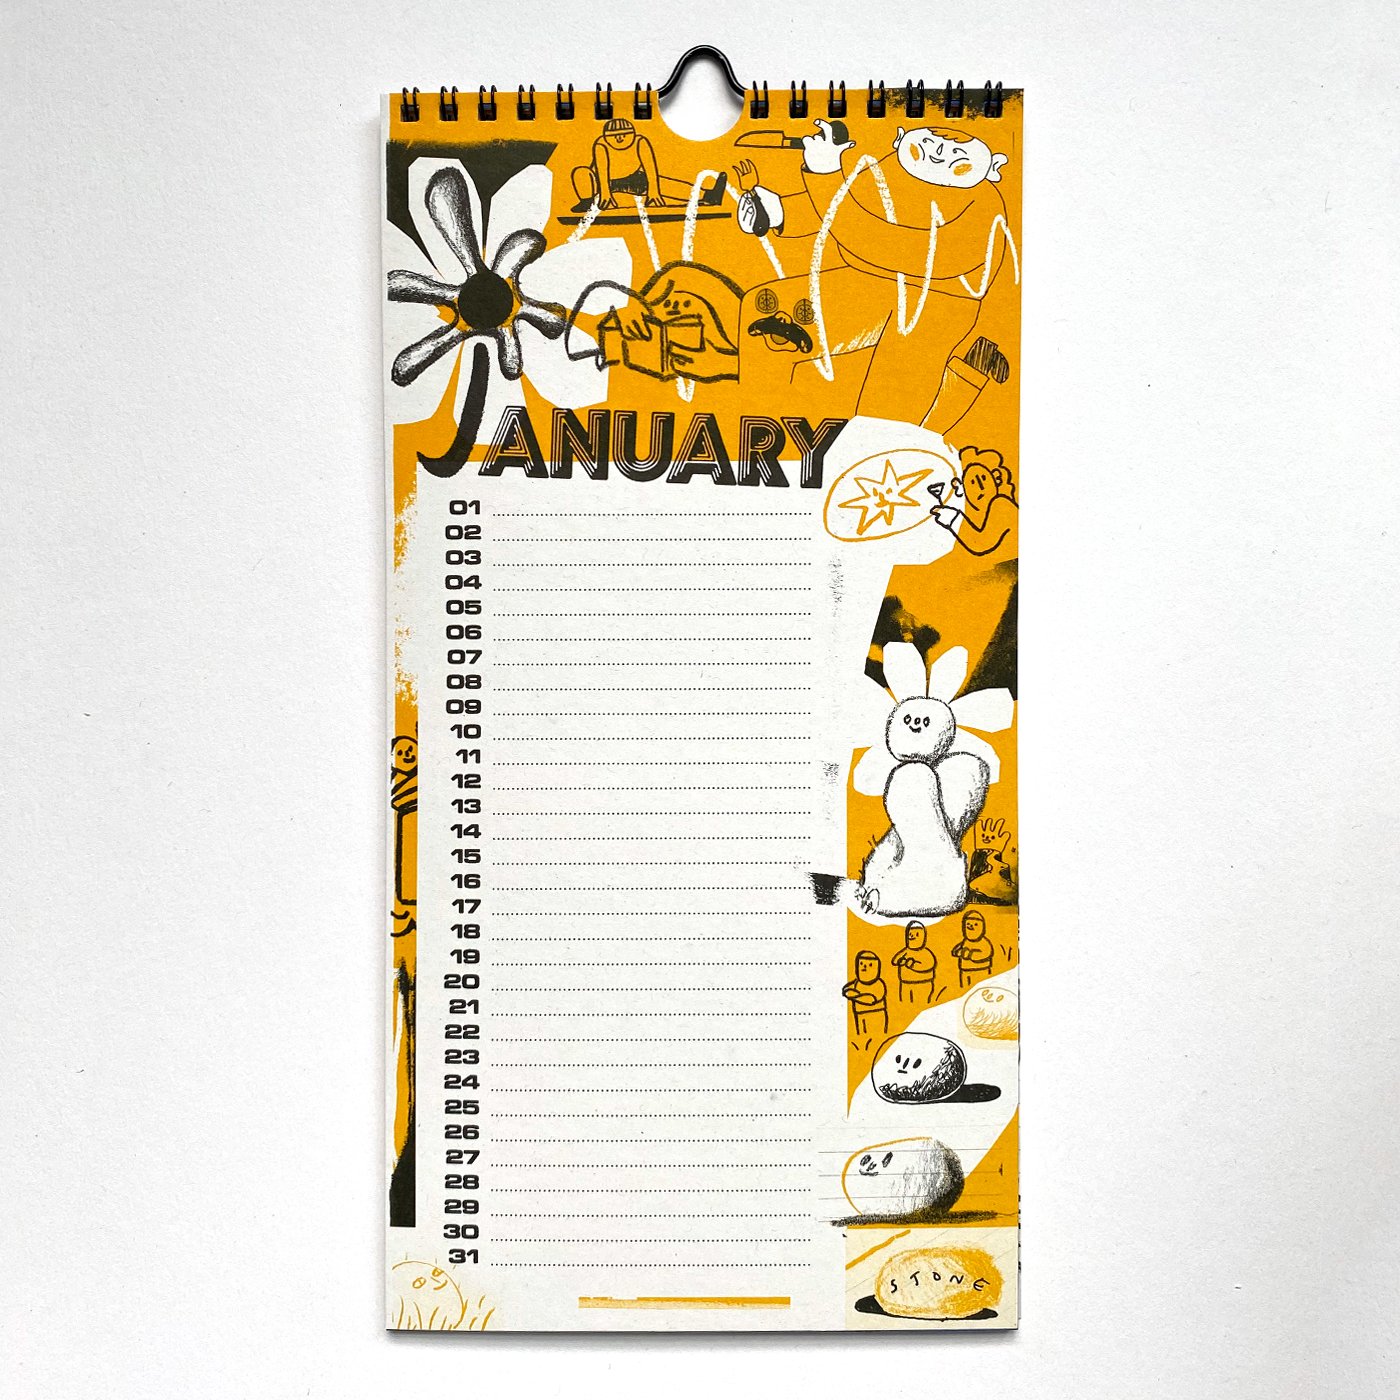 Van Vliet's Perpetual Calendar